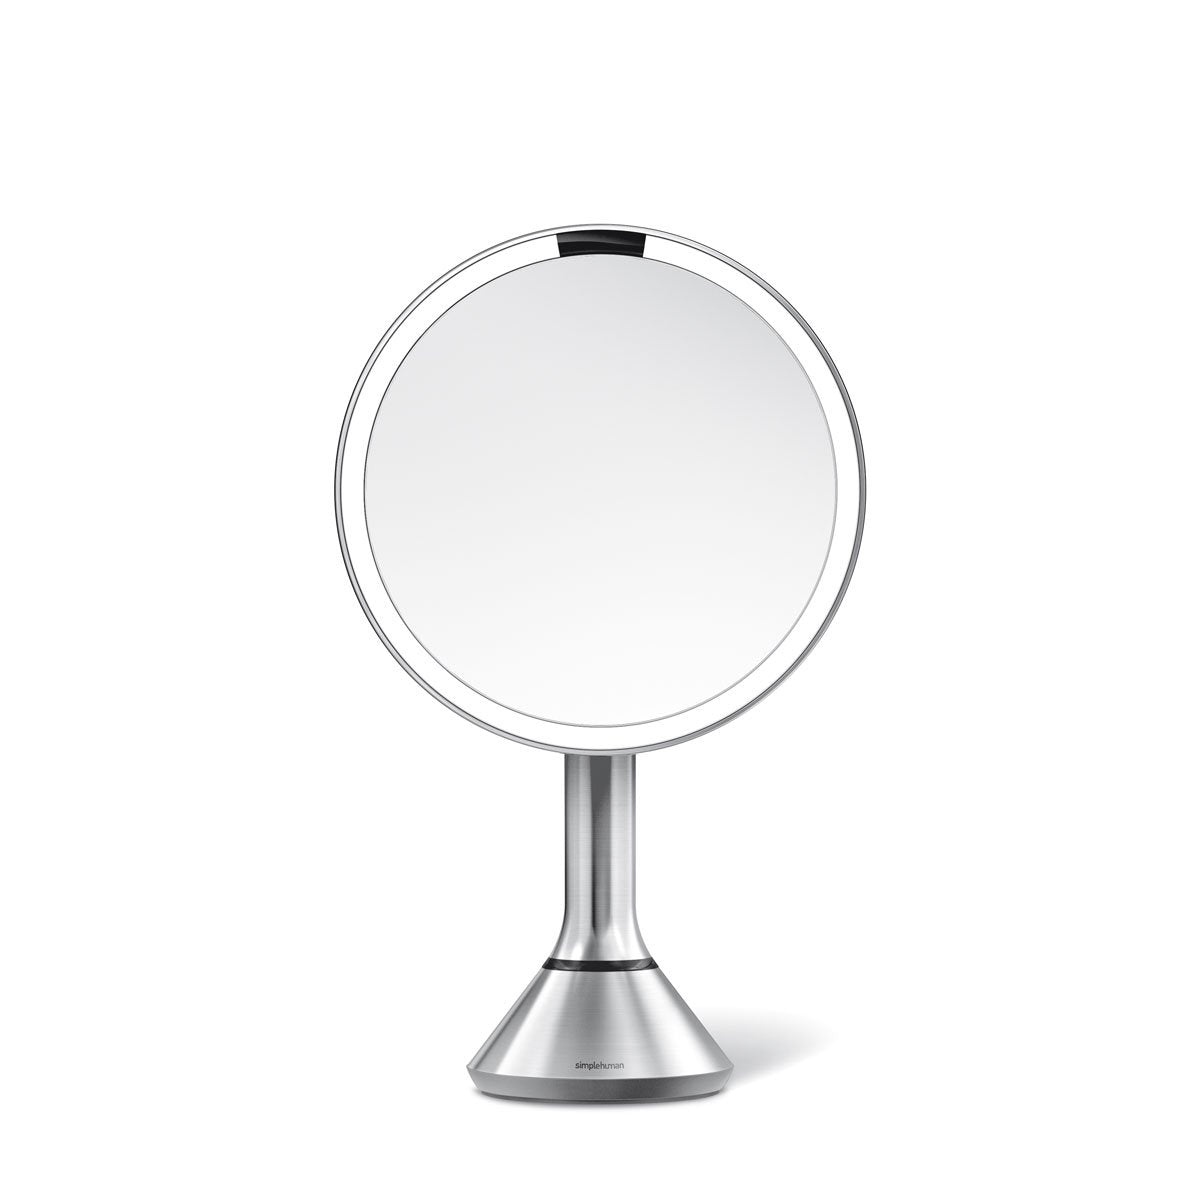 registration: sensor mirrors - sensor mirror round